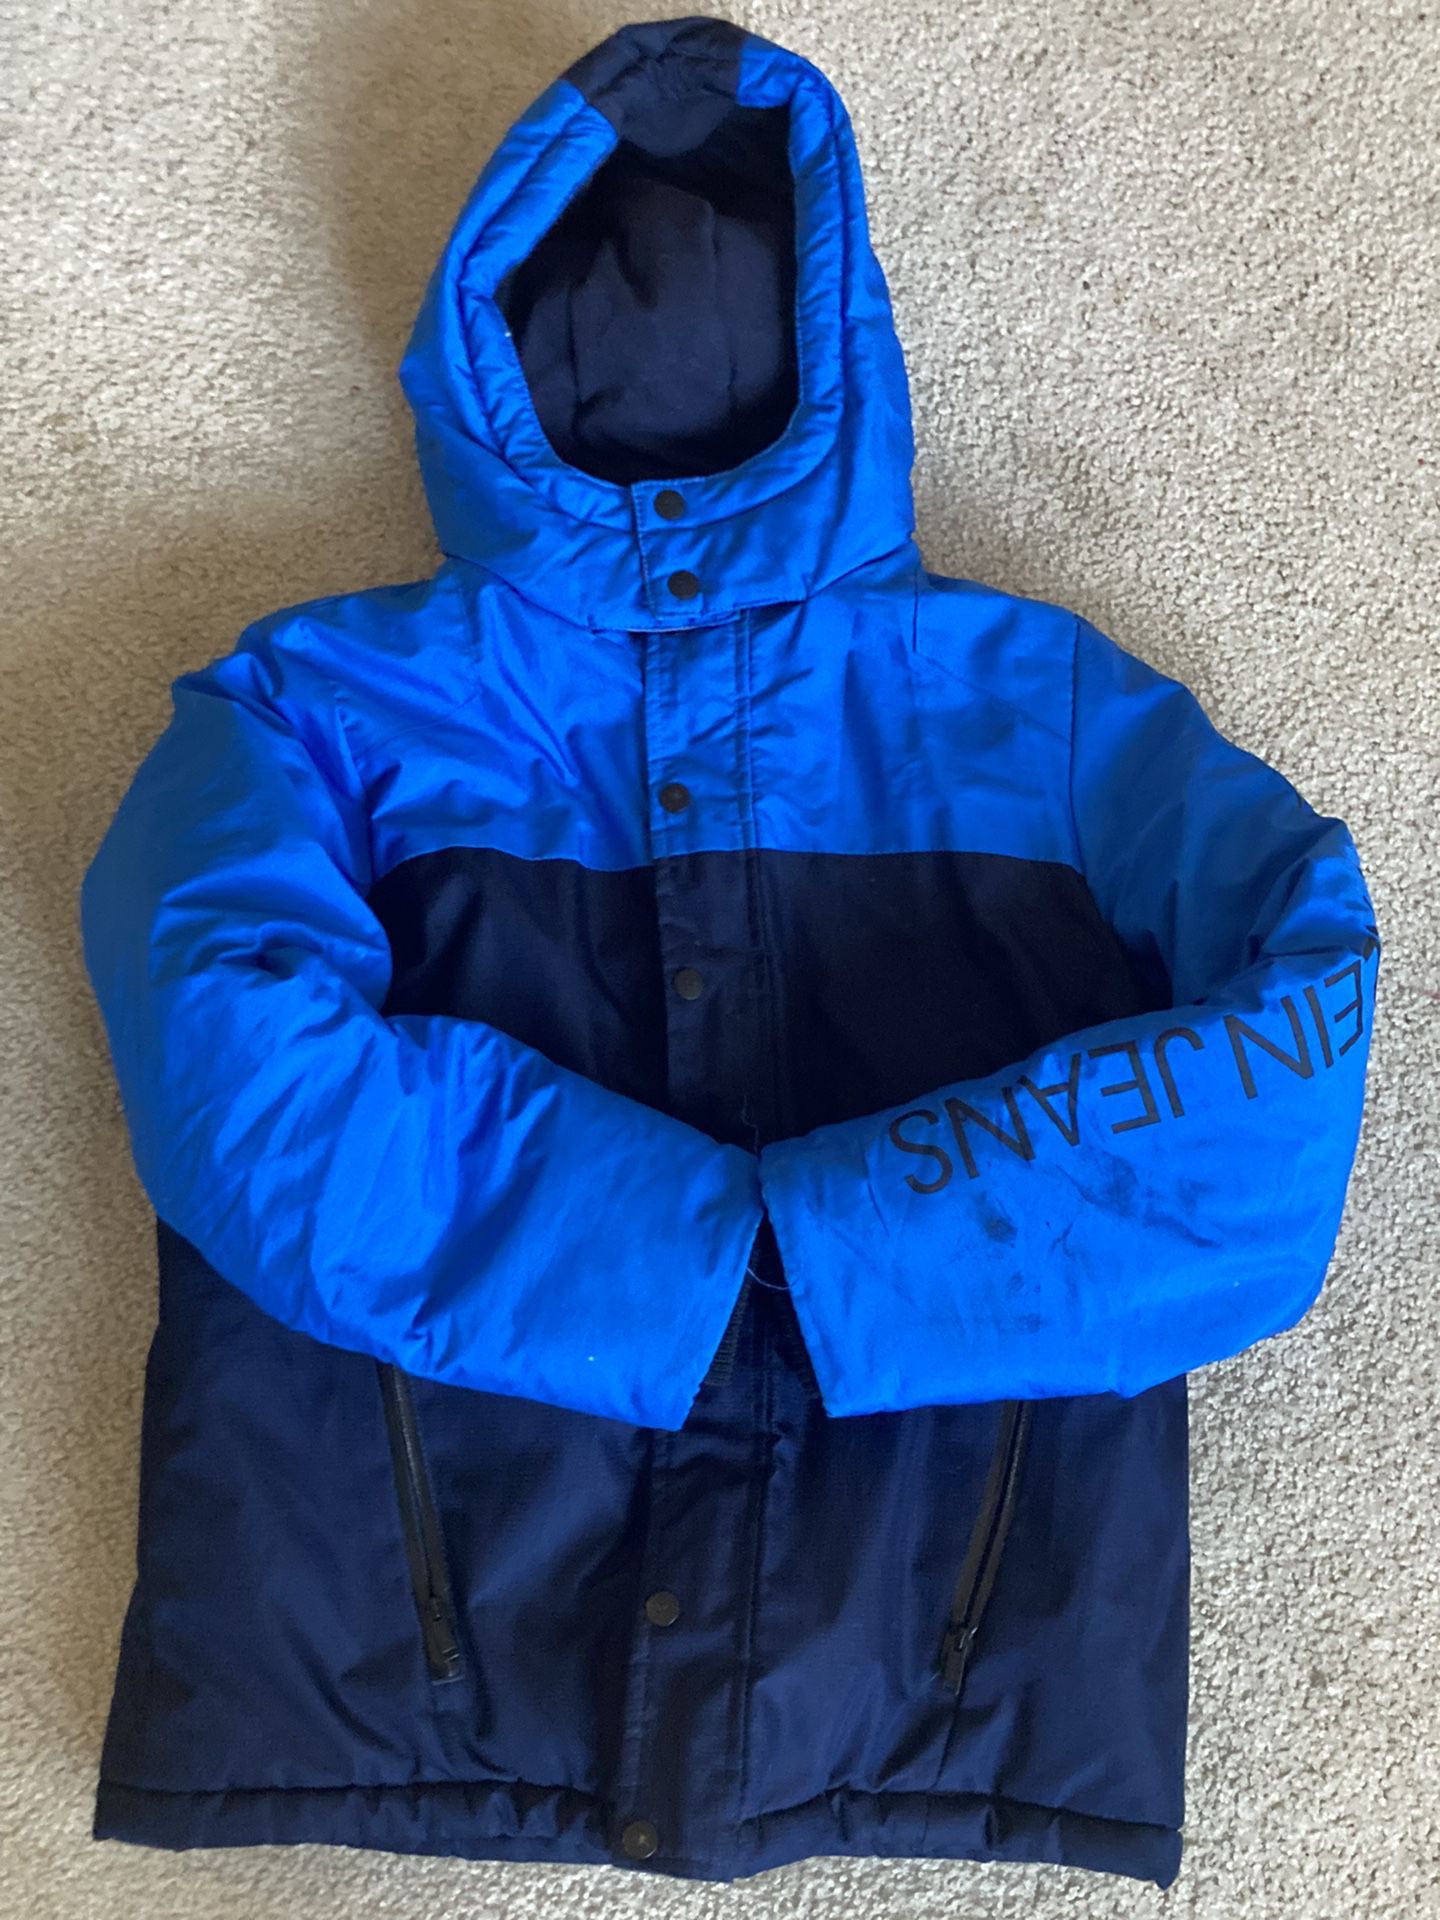 Boys/youth Size 14/16 Winter Jacket